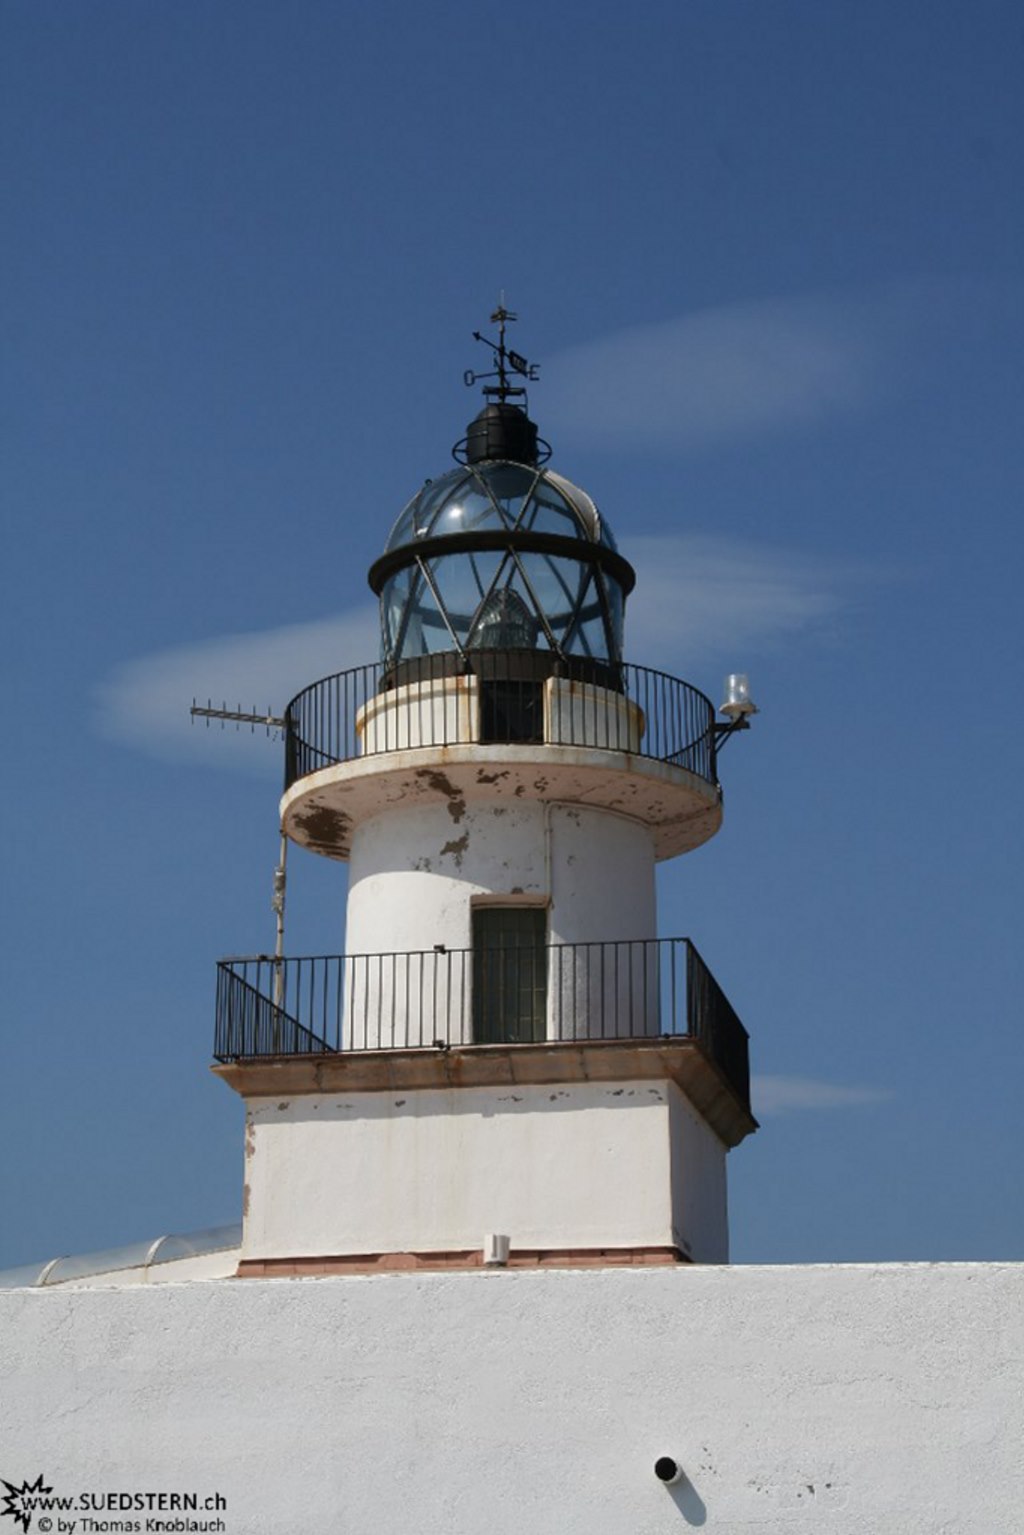 2008-09-03 - Lighthouse close up Cap de creus, spain